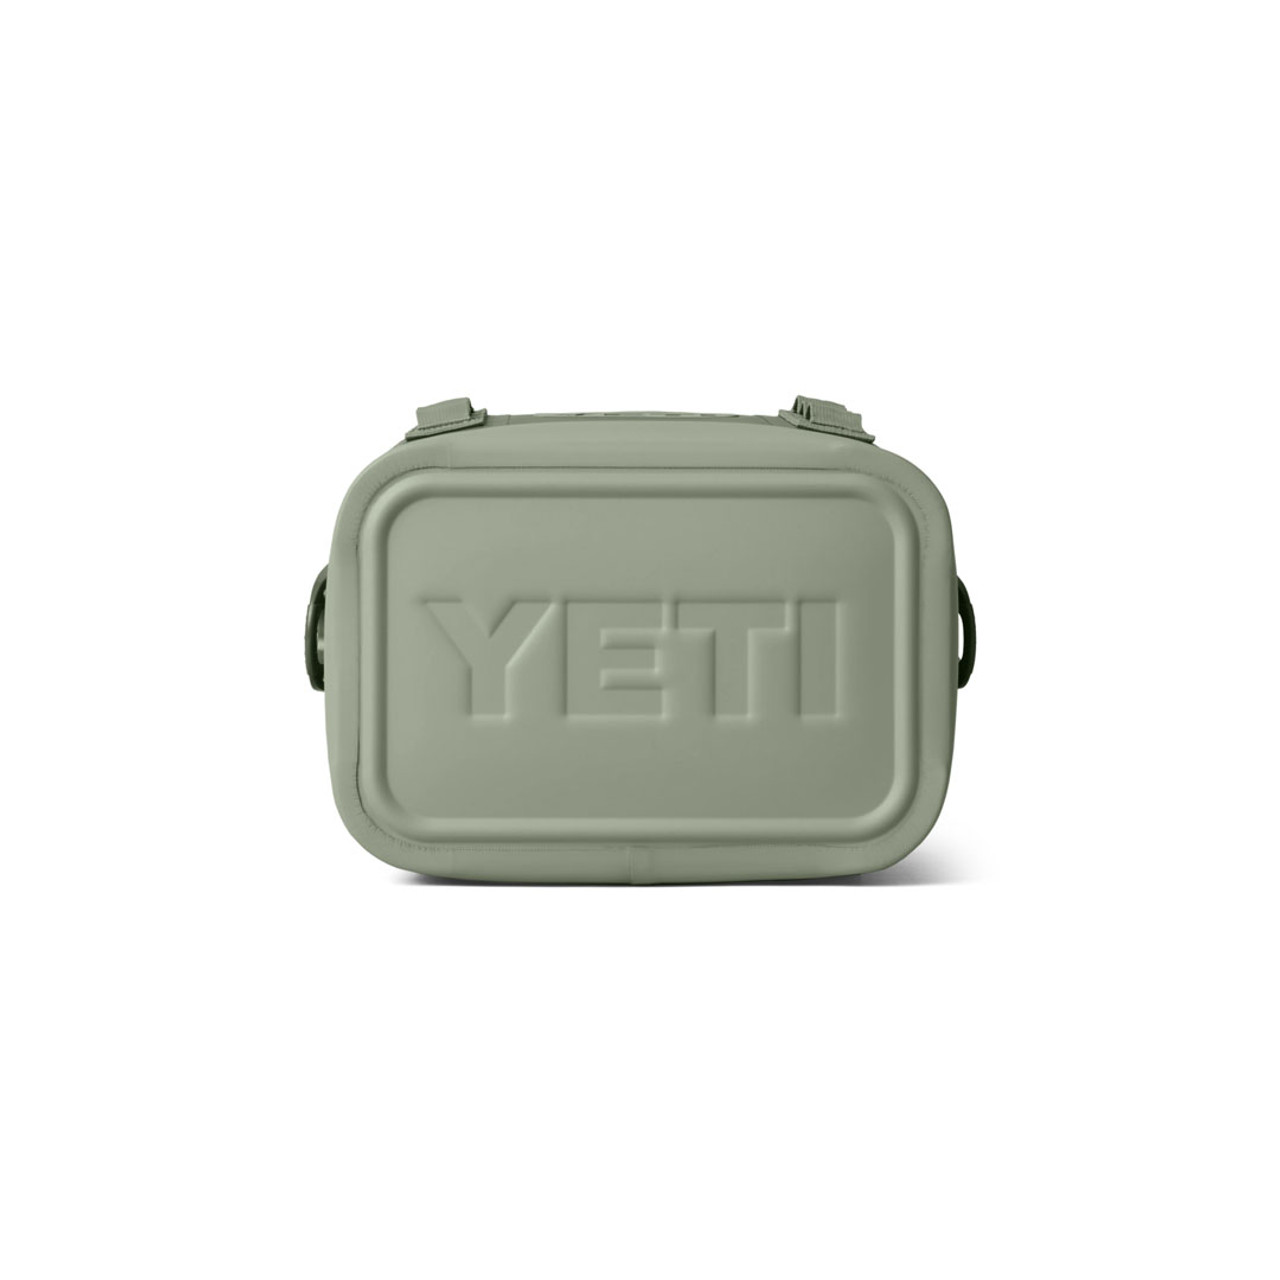 Yeti Hopper Flip 8 Soft Cooler - Aquifer Blue (minty green) Limited edition  New